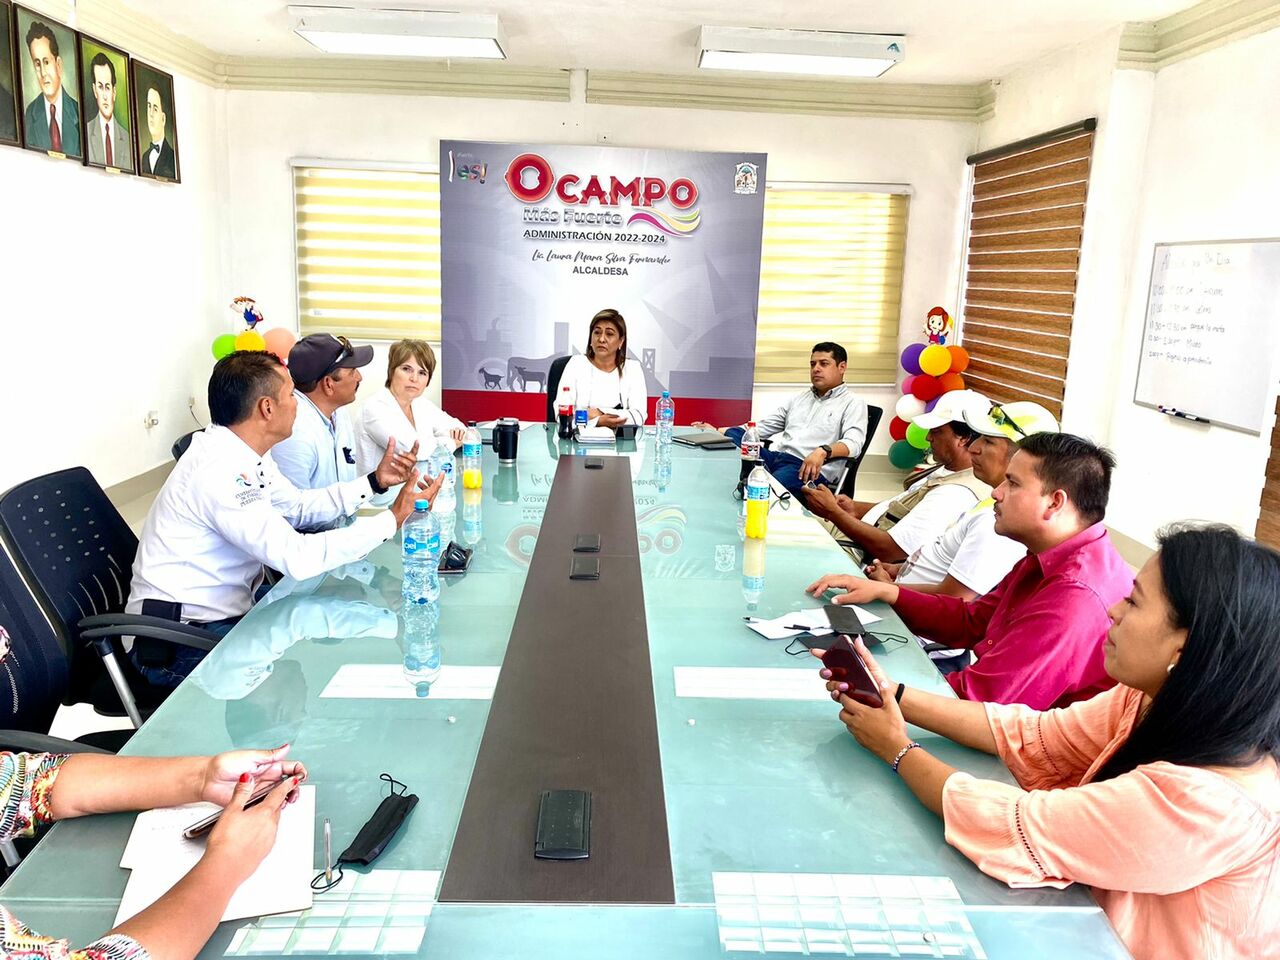 Promoverán Ocampo como atractivo turístico en Coahuila